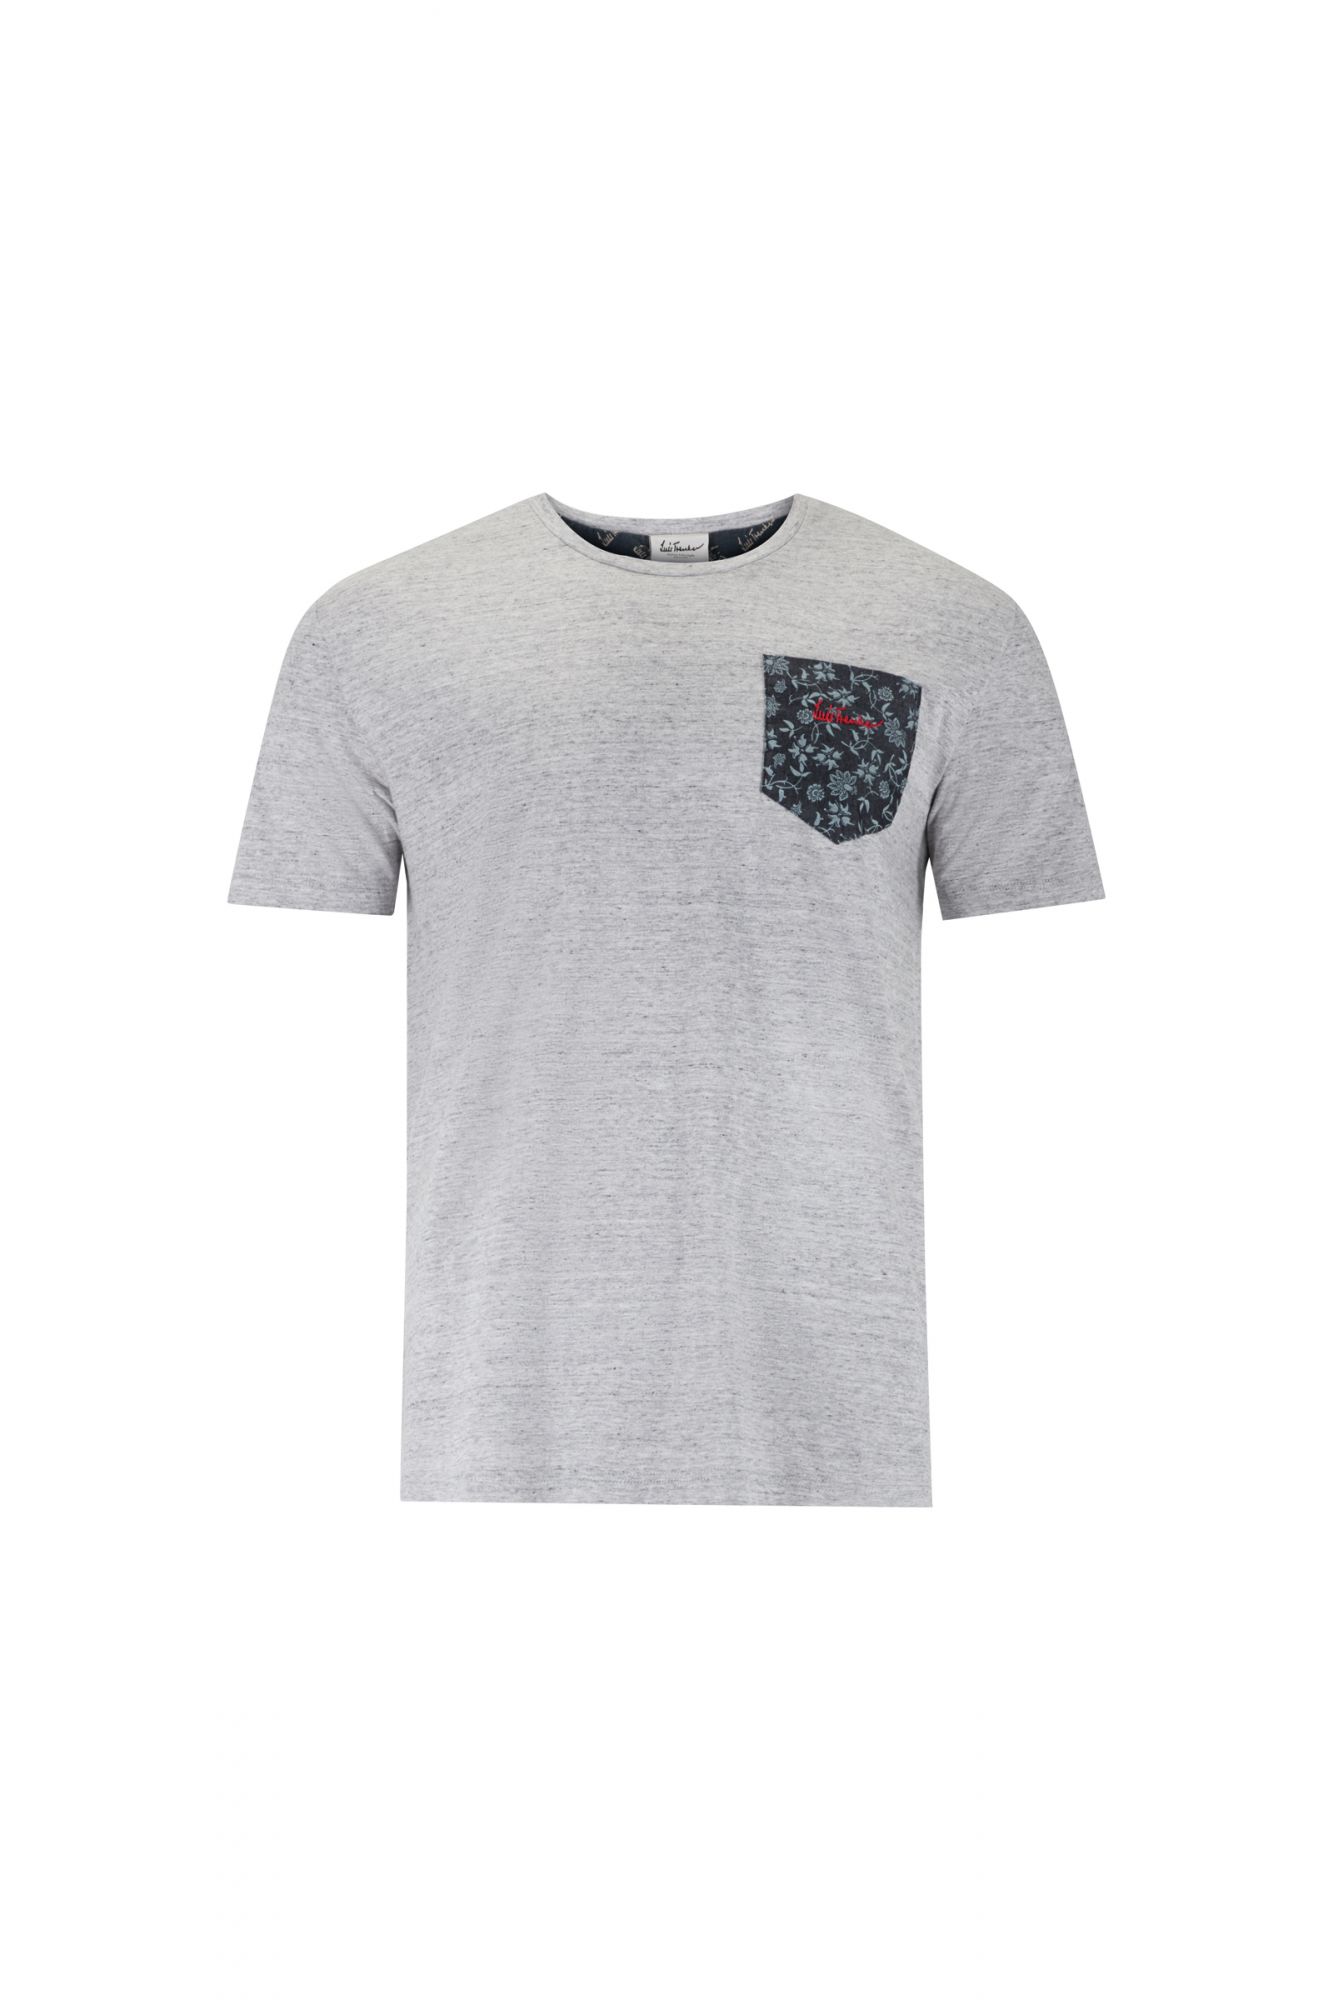 Luis Trenker Cliff Grau- Male Kurzarm-Shirts- Grsse XL - Farbe Hellgrau unter Luis Trenker